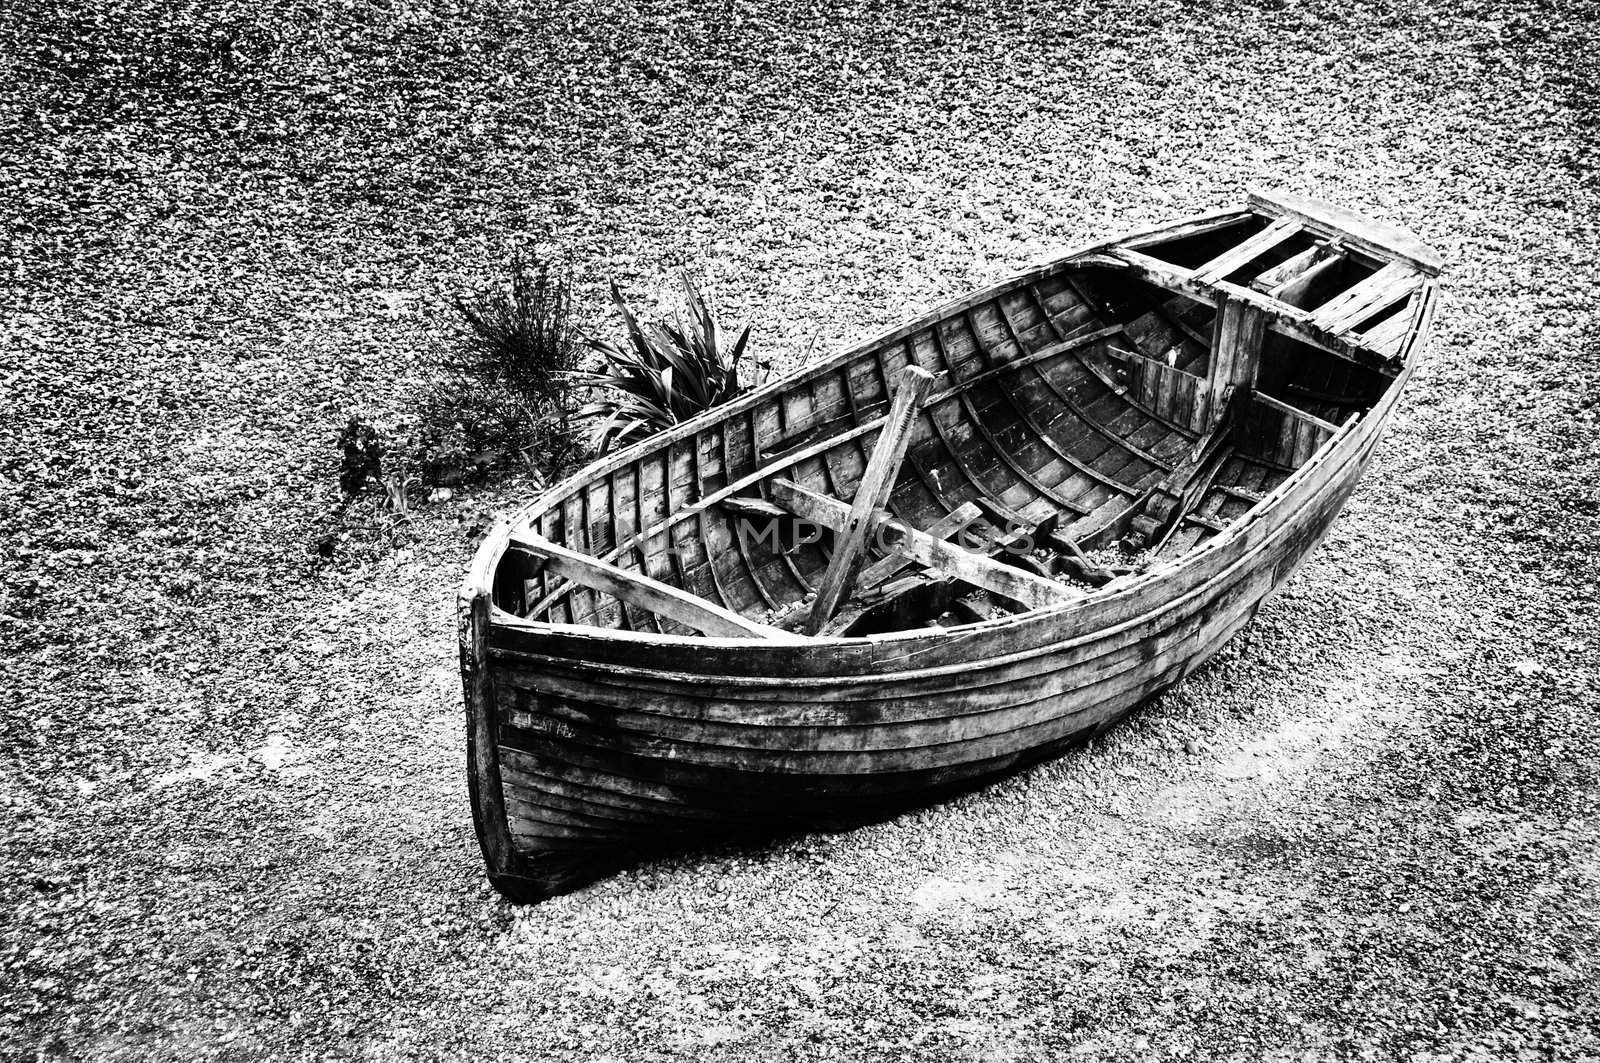 Old fisherman boat, Brighton beach, UK, black and white photography